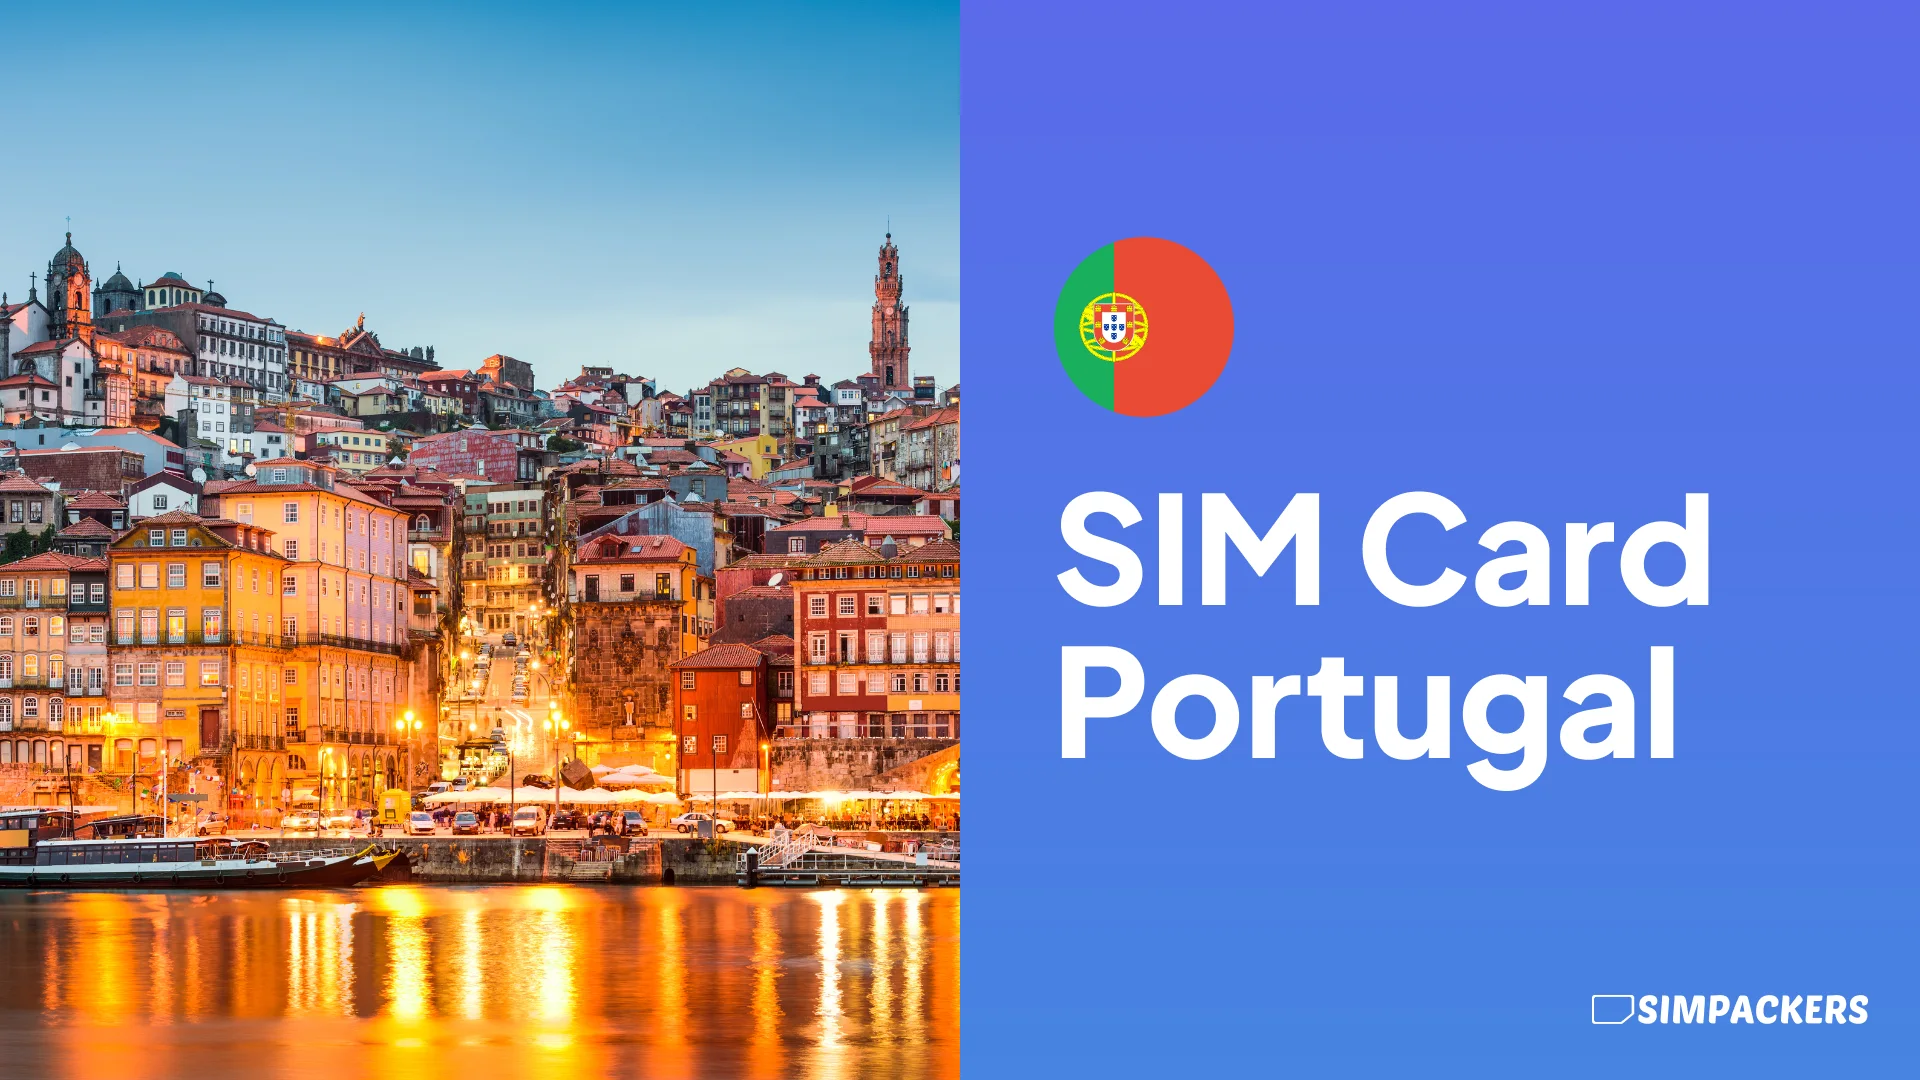 EN/FEATURED_IMAGES/sim-card-portugal.webp